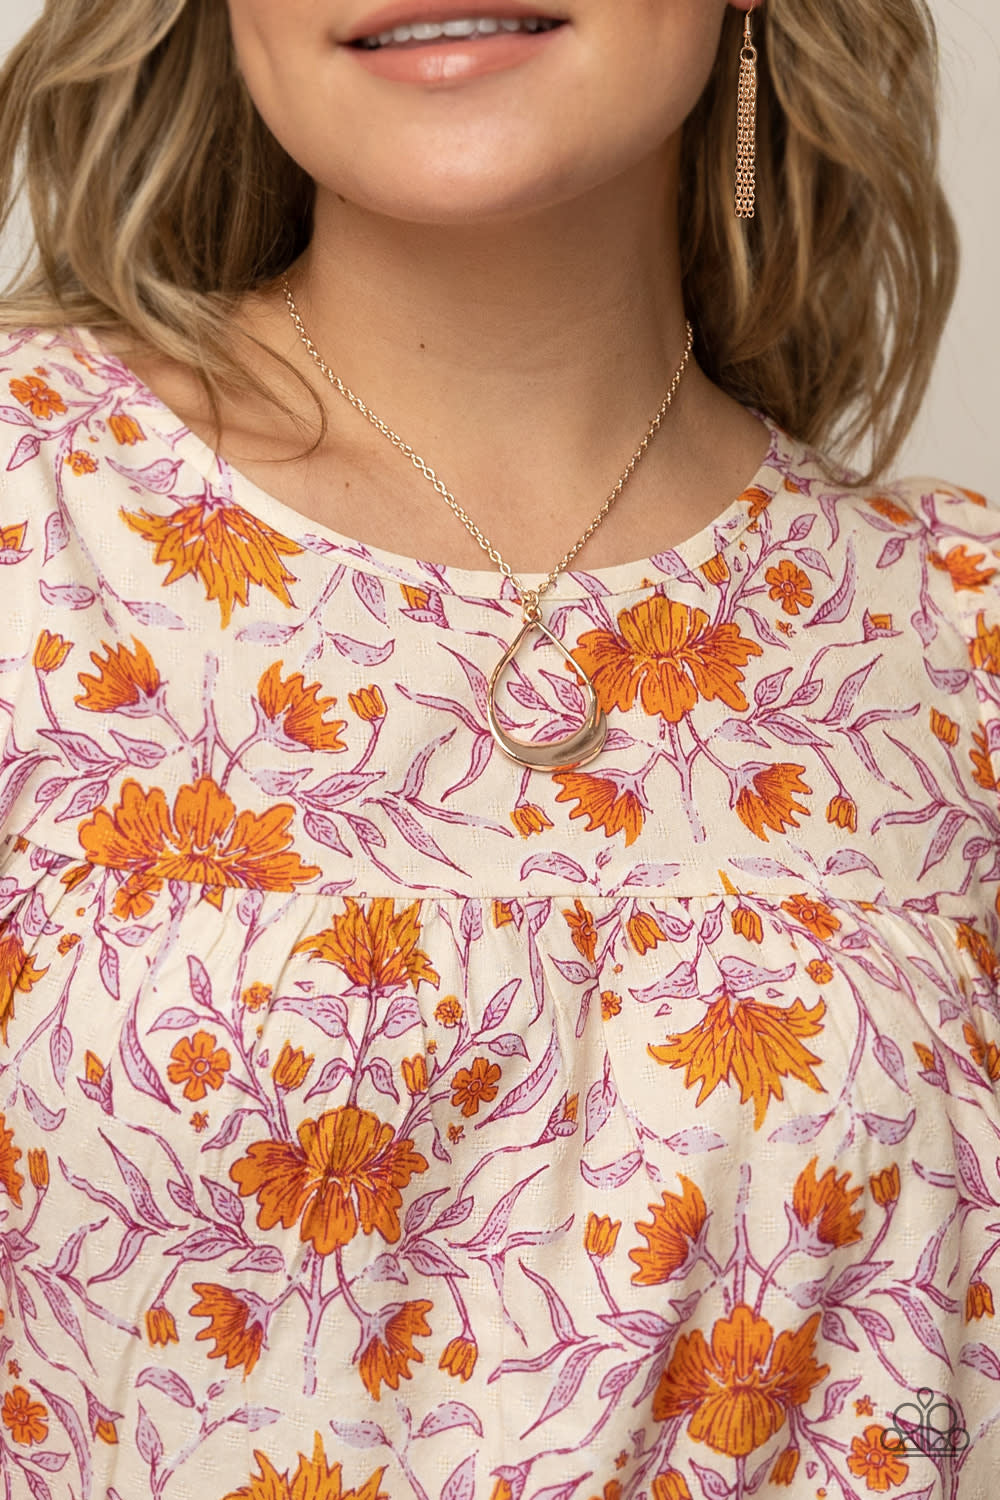 Subtle Season - rose gold - Paparazzi necklace